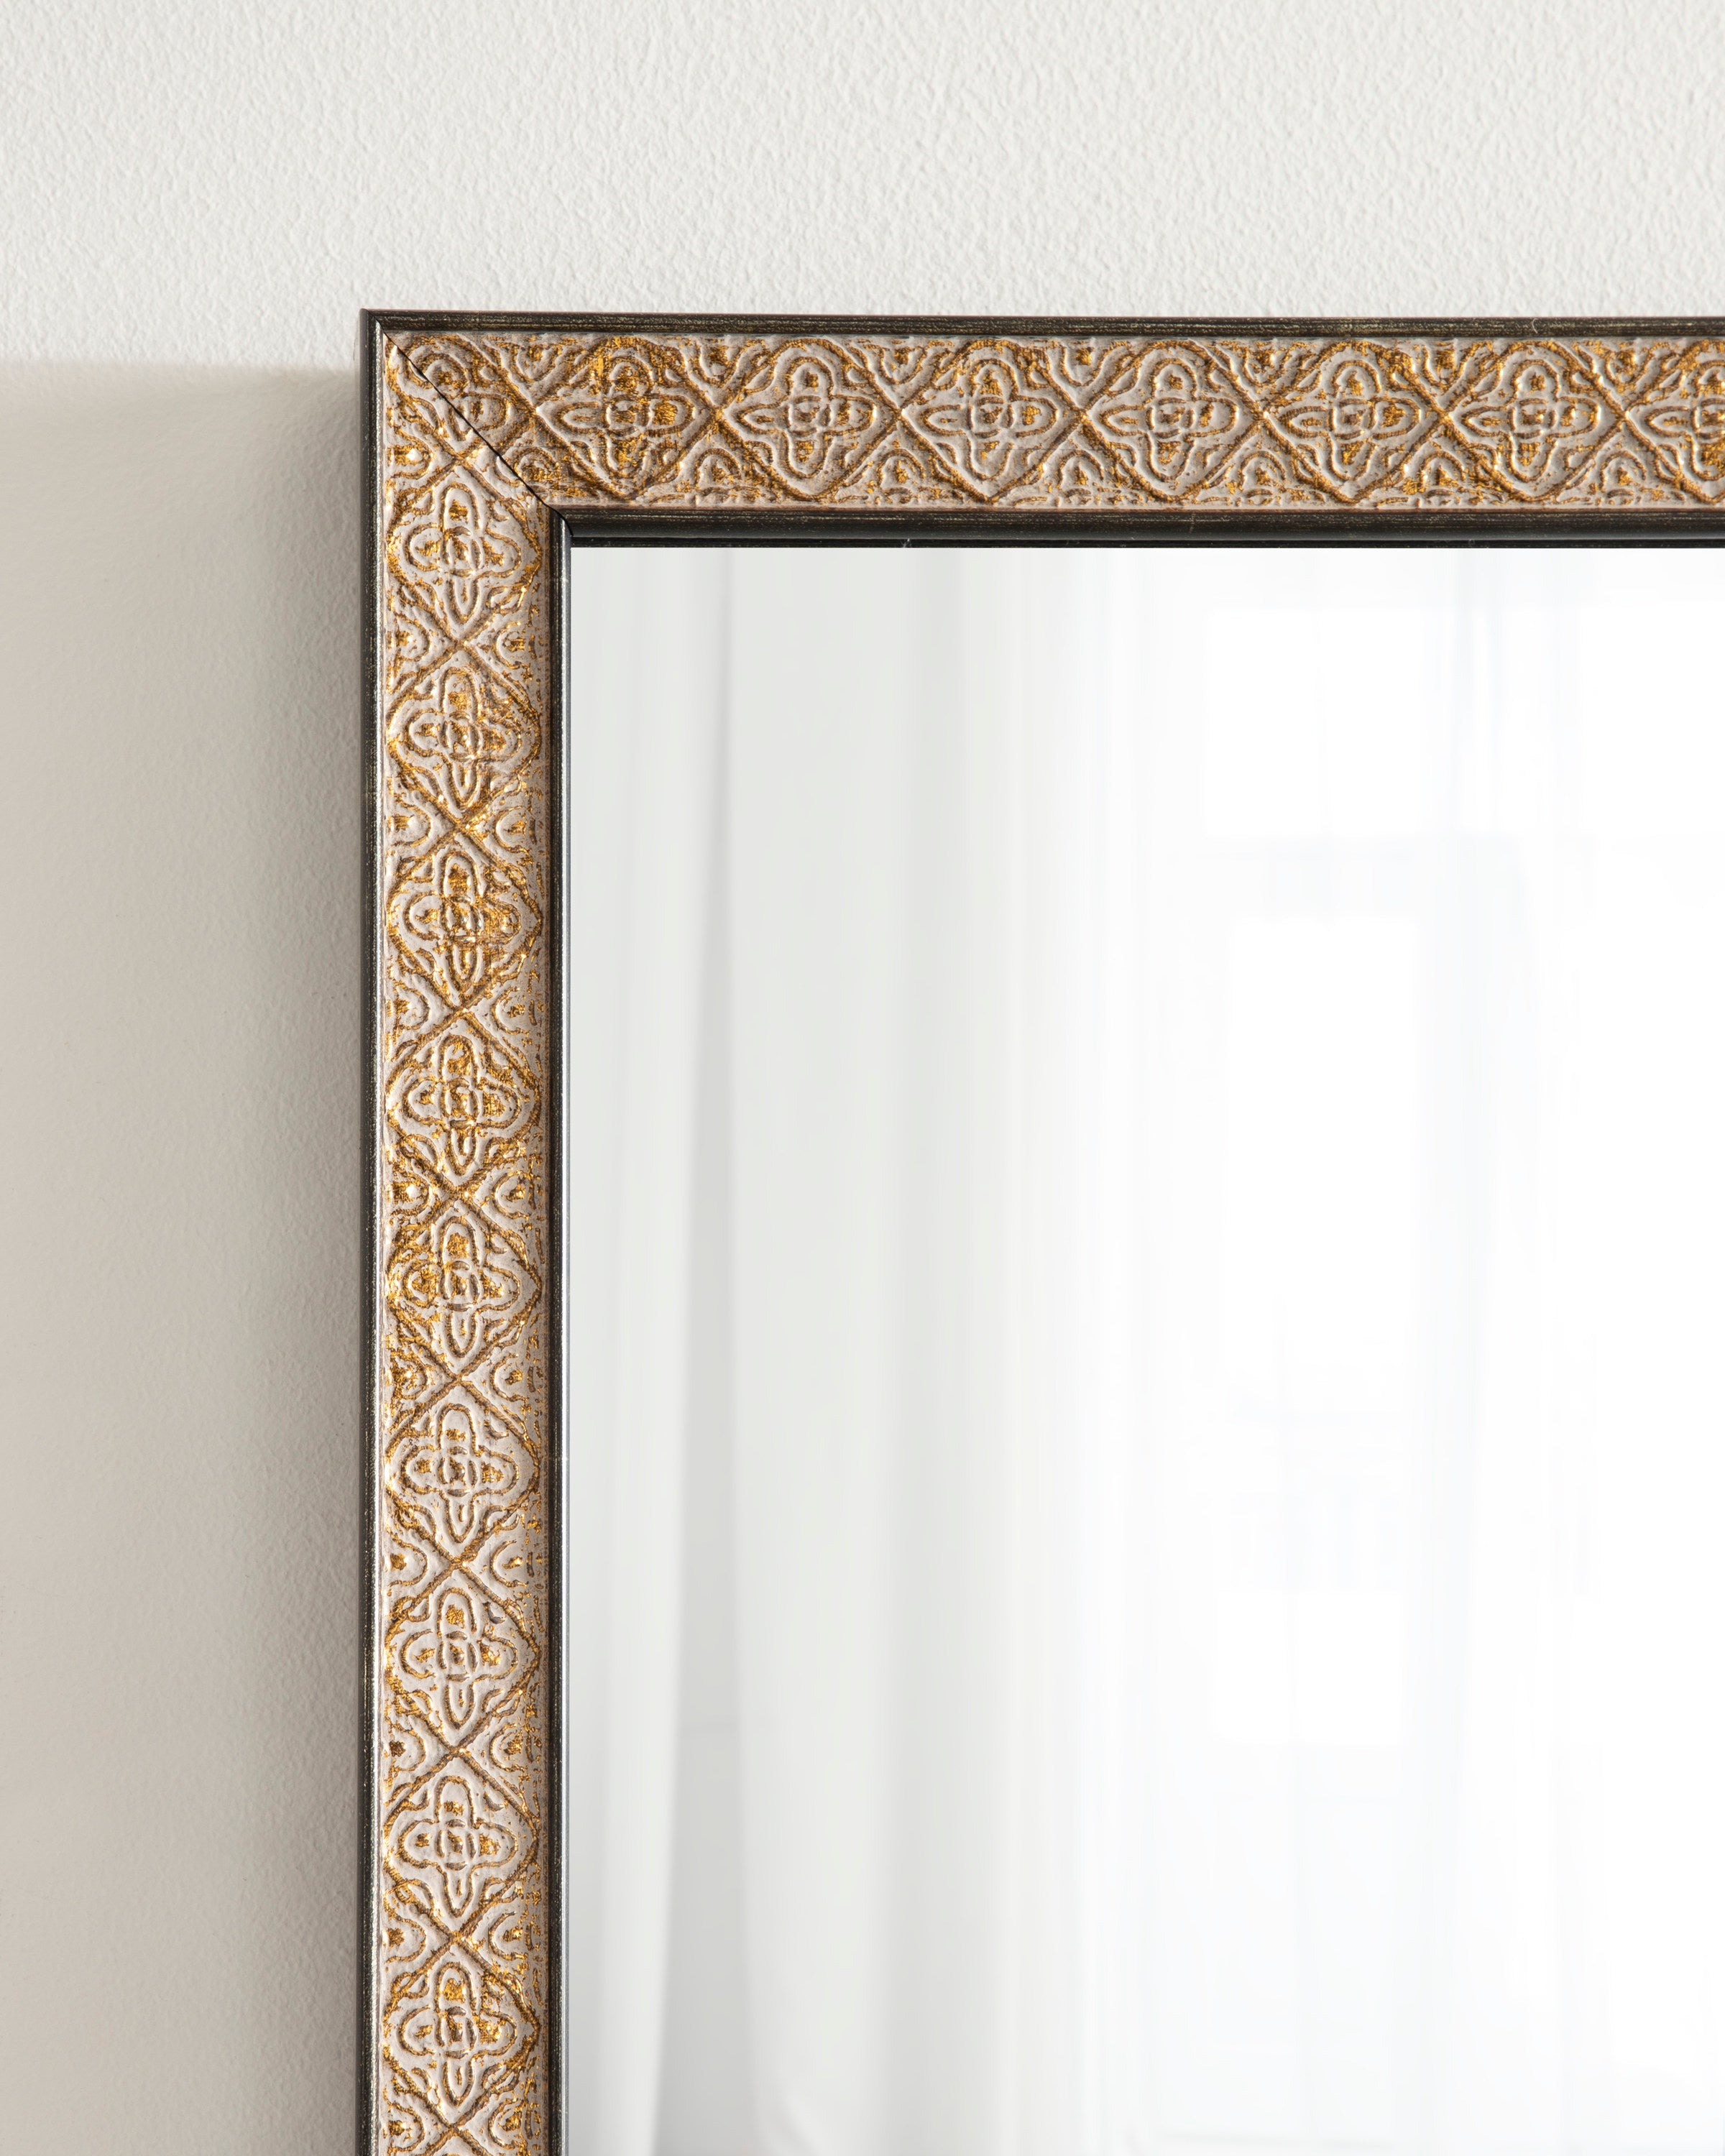 Soniva Rectangle Wall Mirror